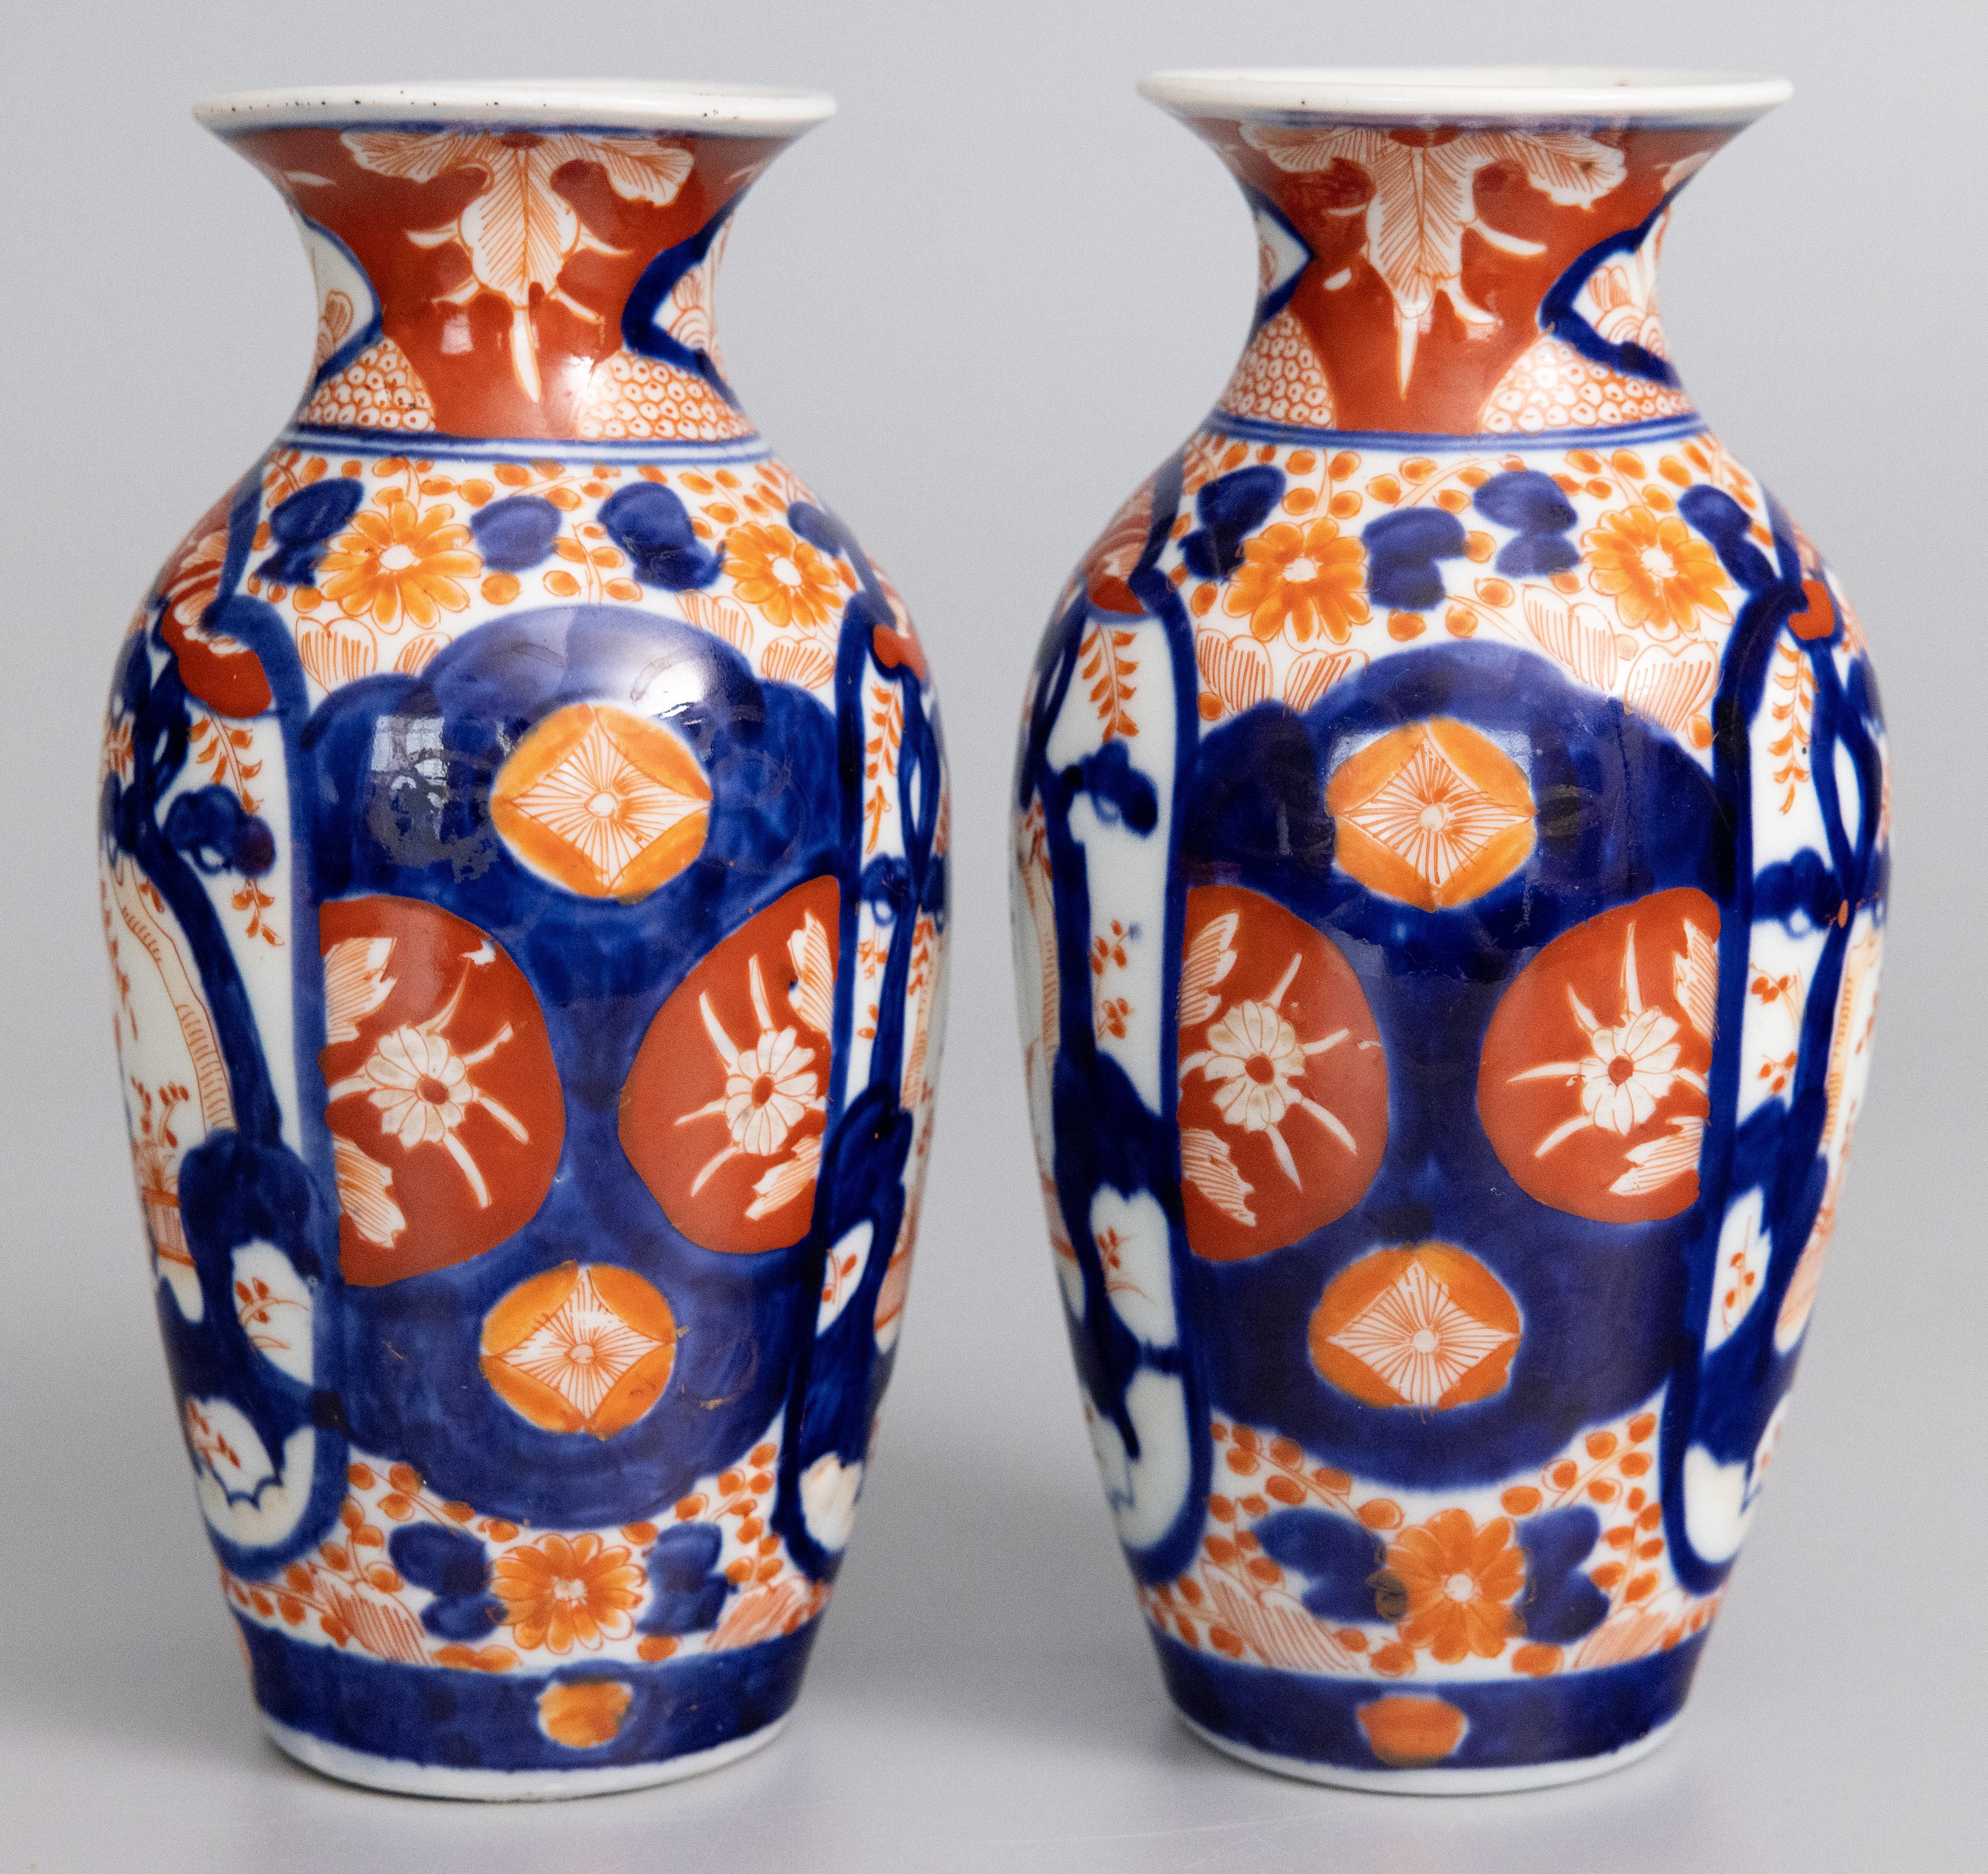 Fired Antique 19th Century Japanese Imari Porcelain Vases - a Pair